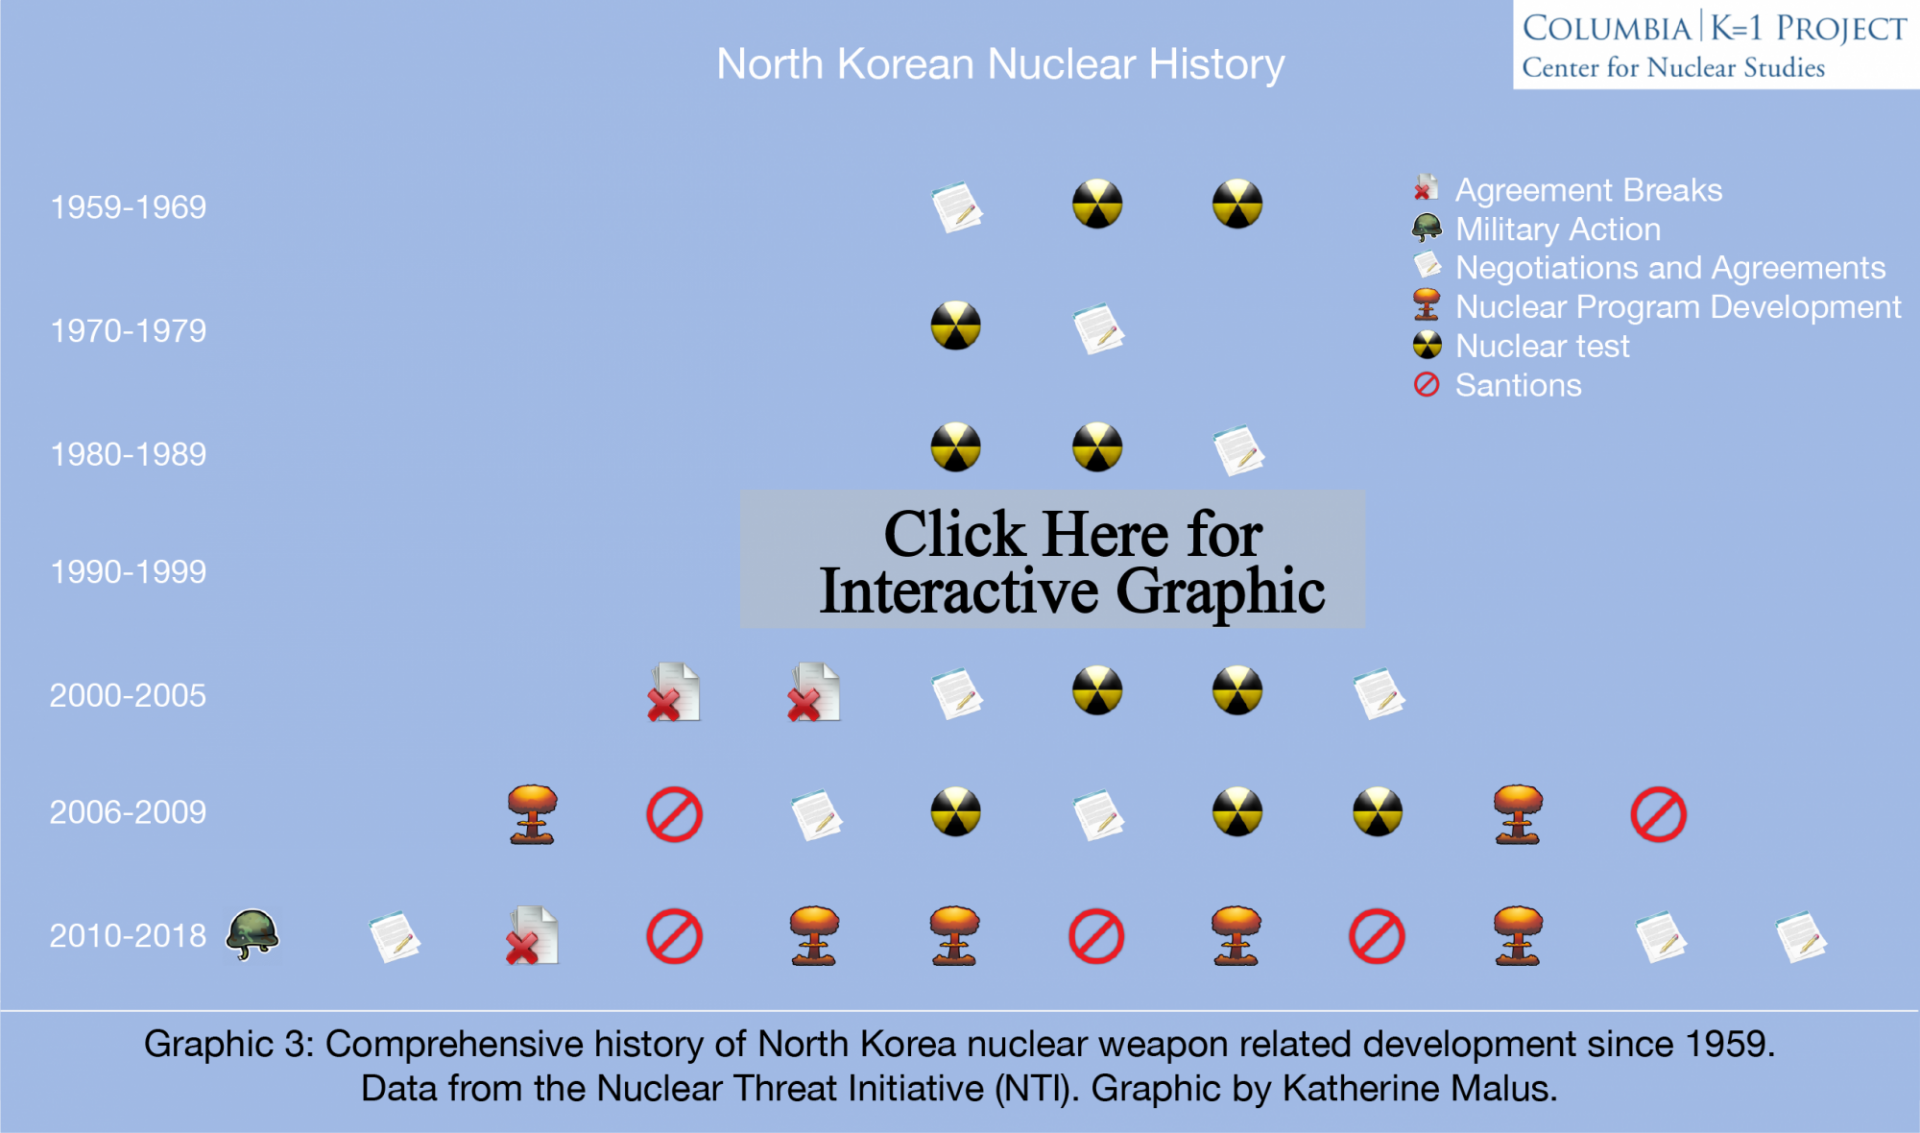 North Korea nuclear program development